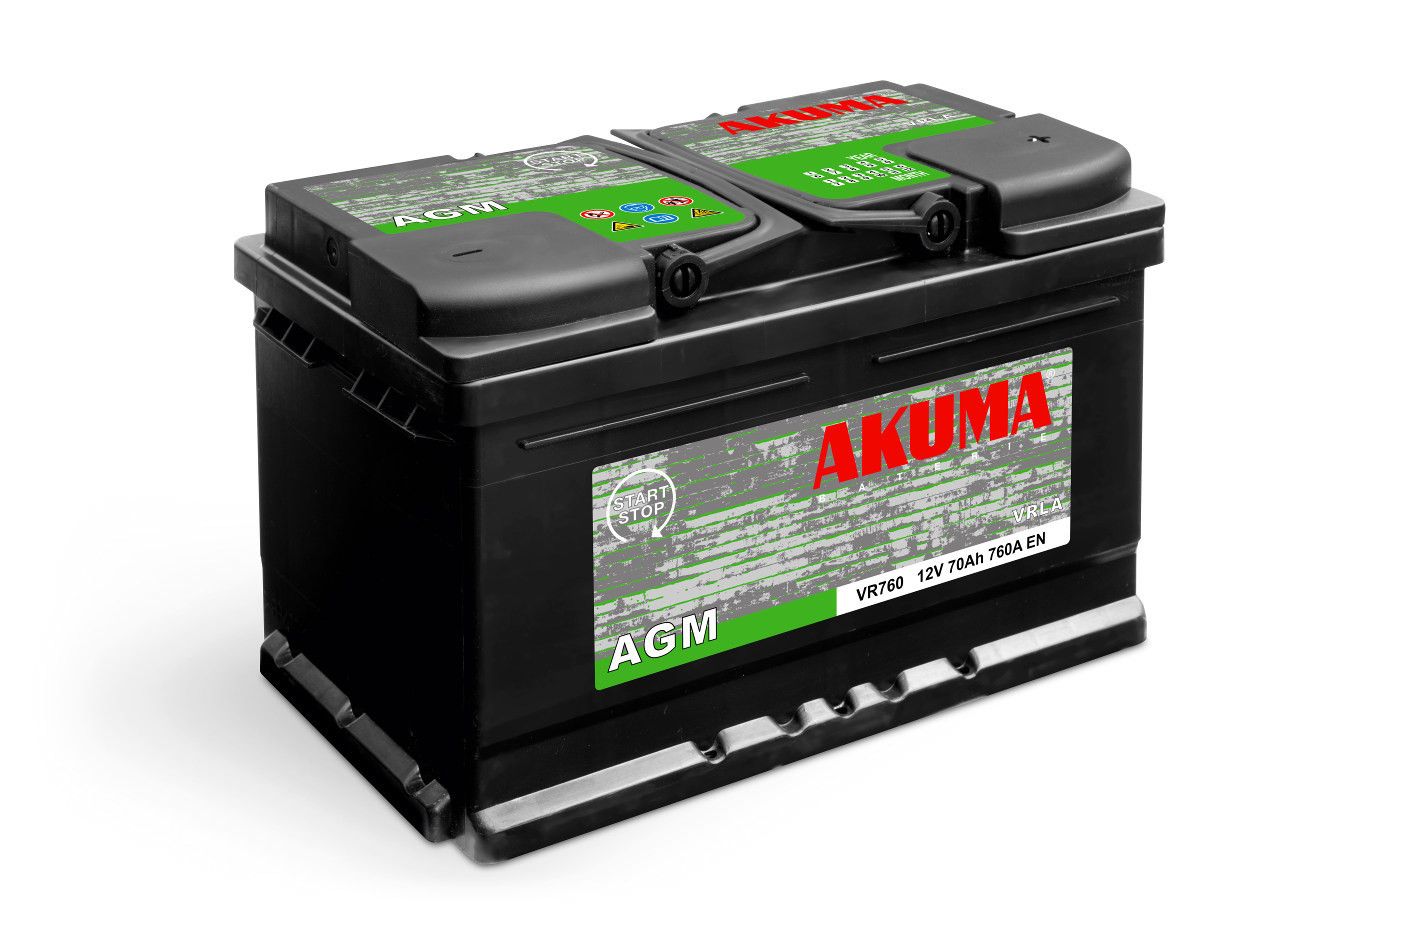 VR900 G14 assl5 Batterie de démarrage Sart&Stop AGM 12v 90 ah 900A